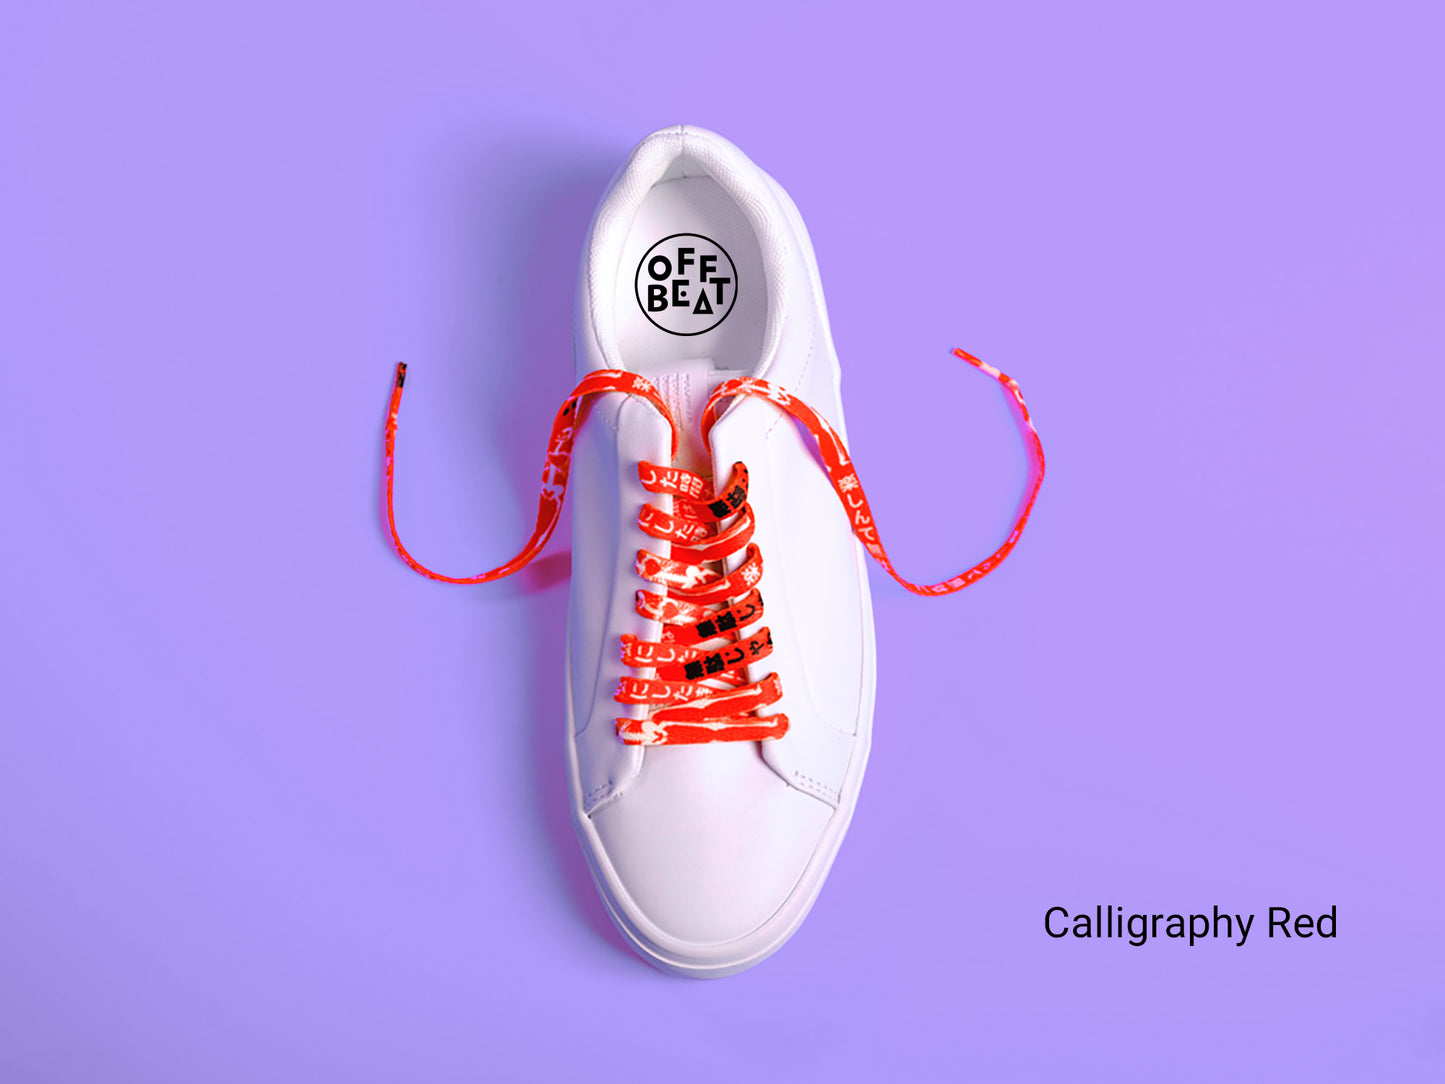 Calligraphy shoelaces